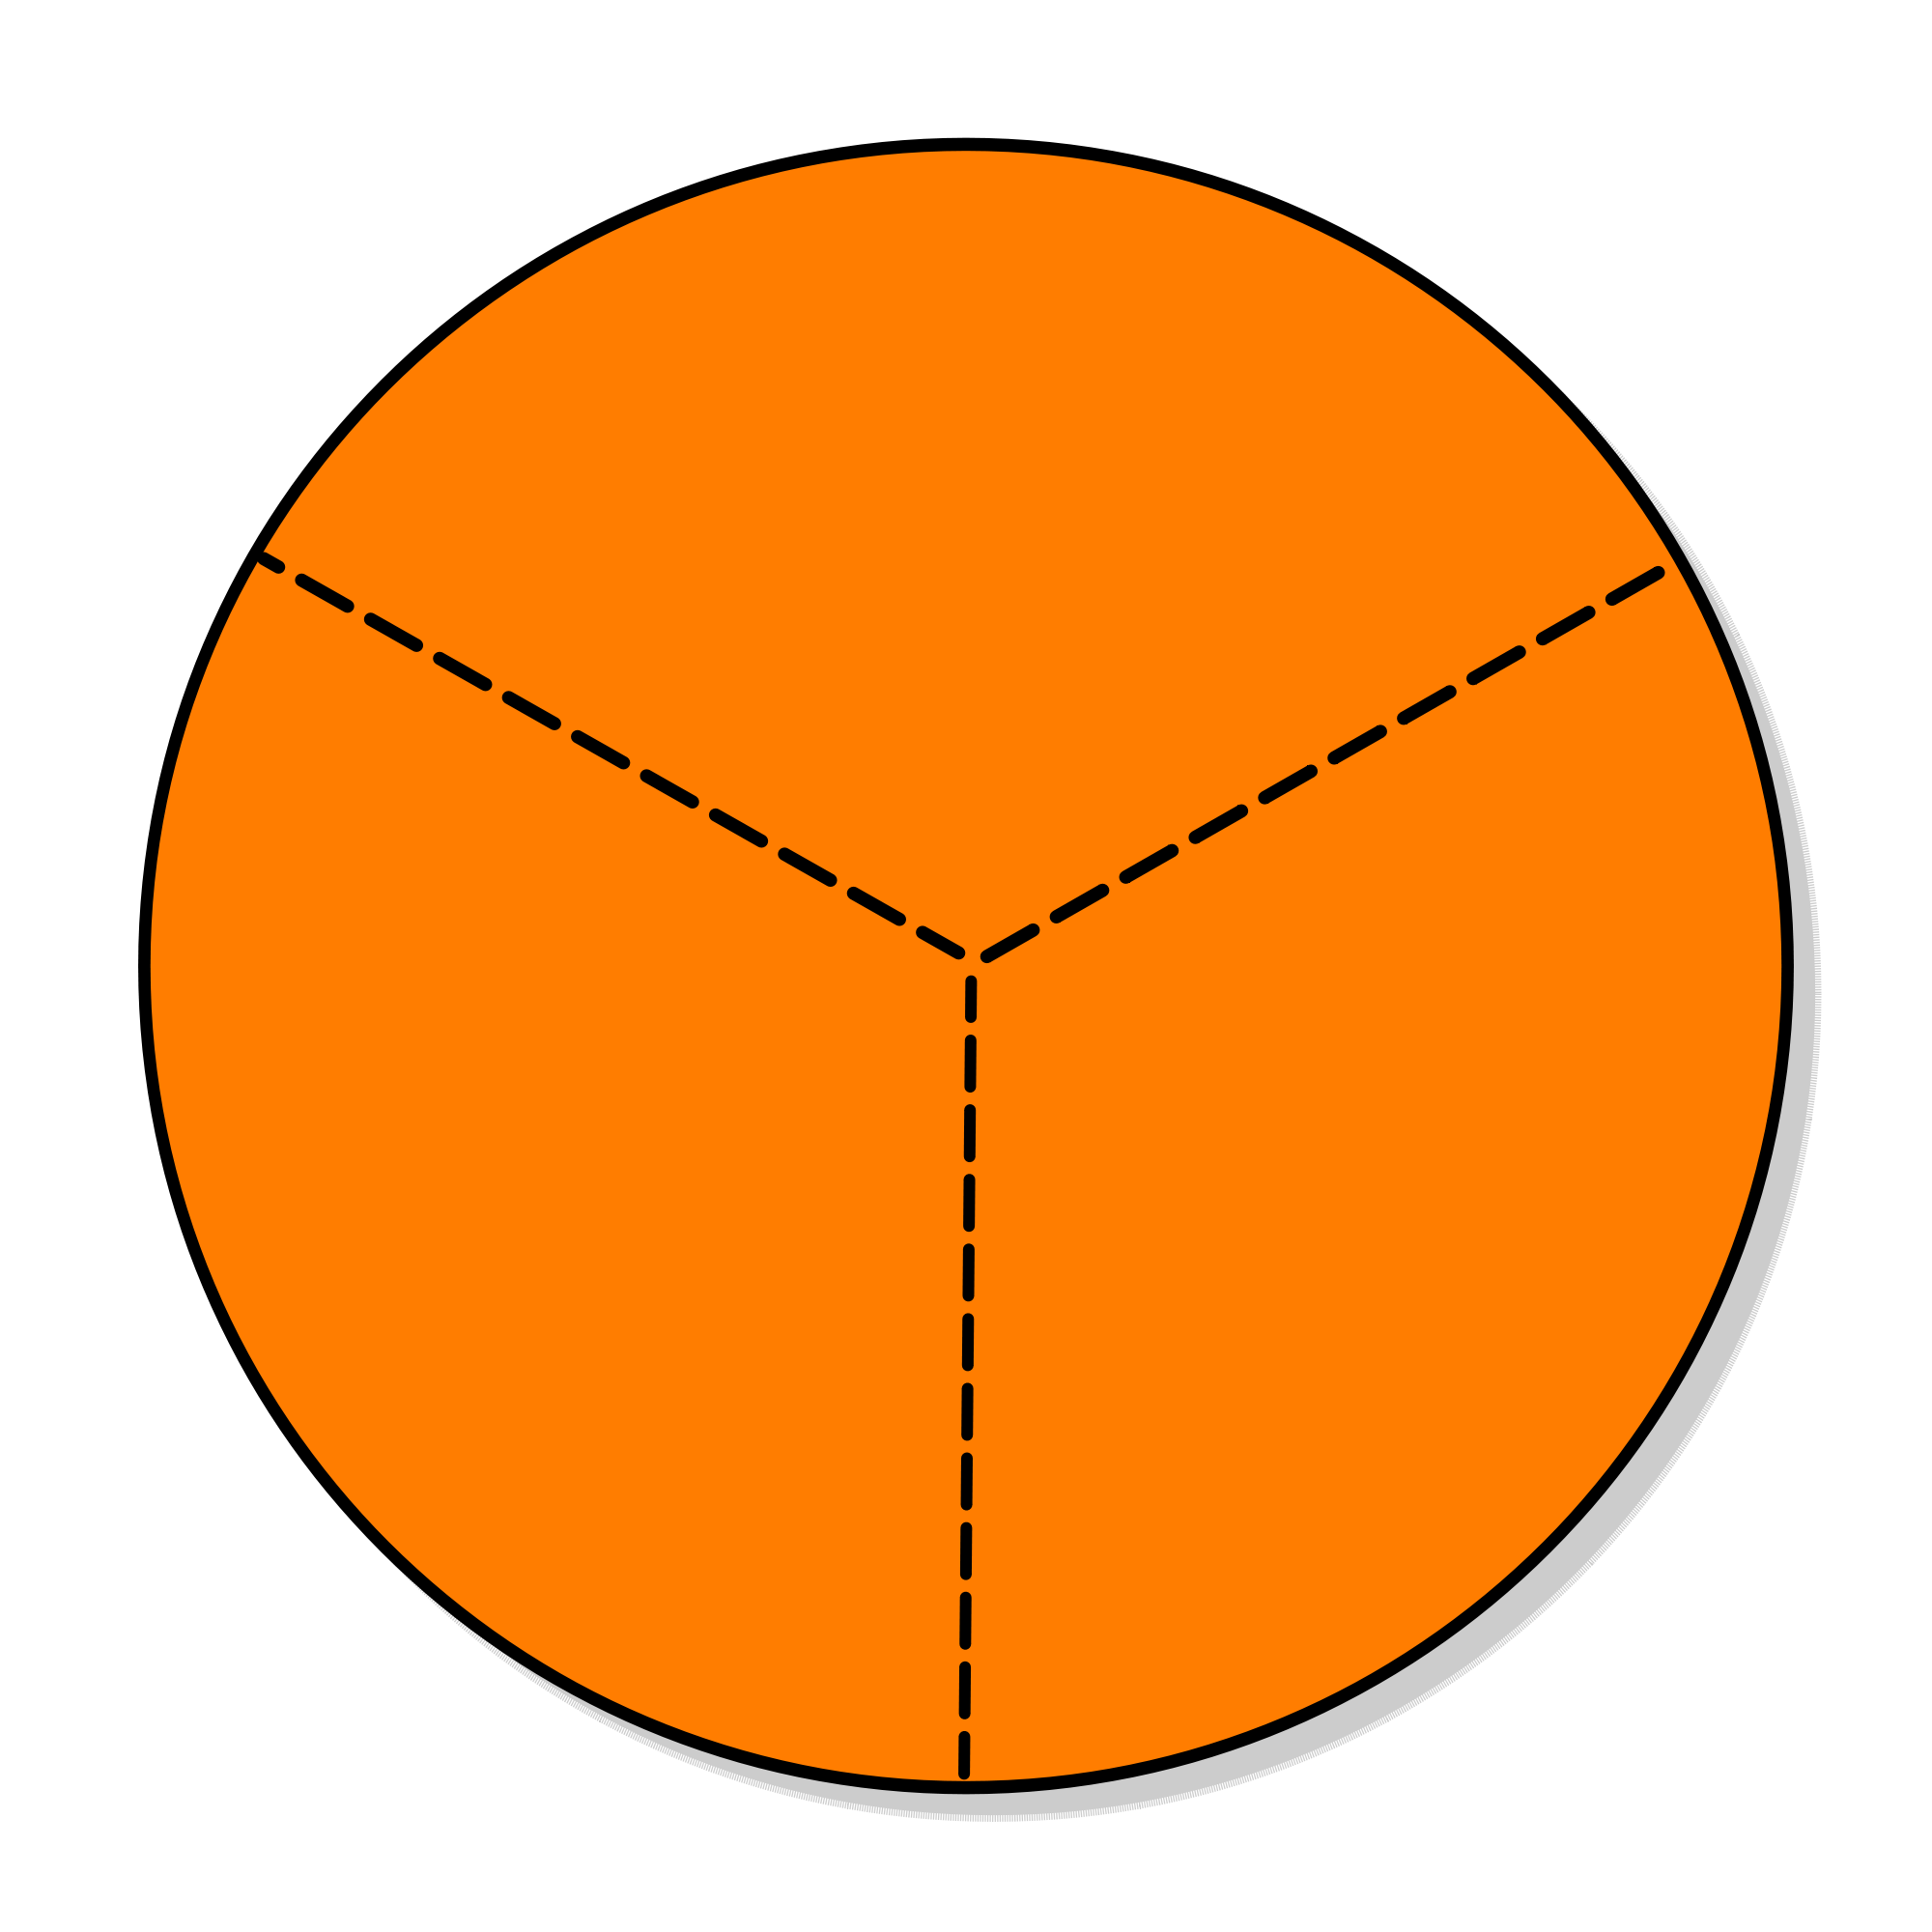 Fraction pie chart